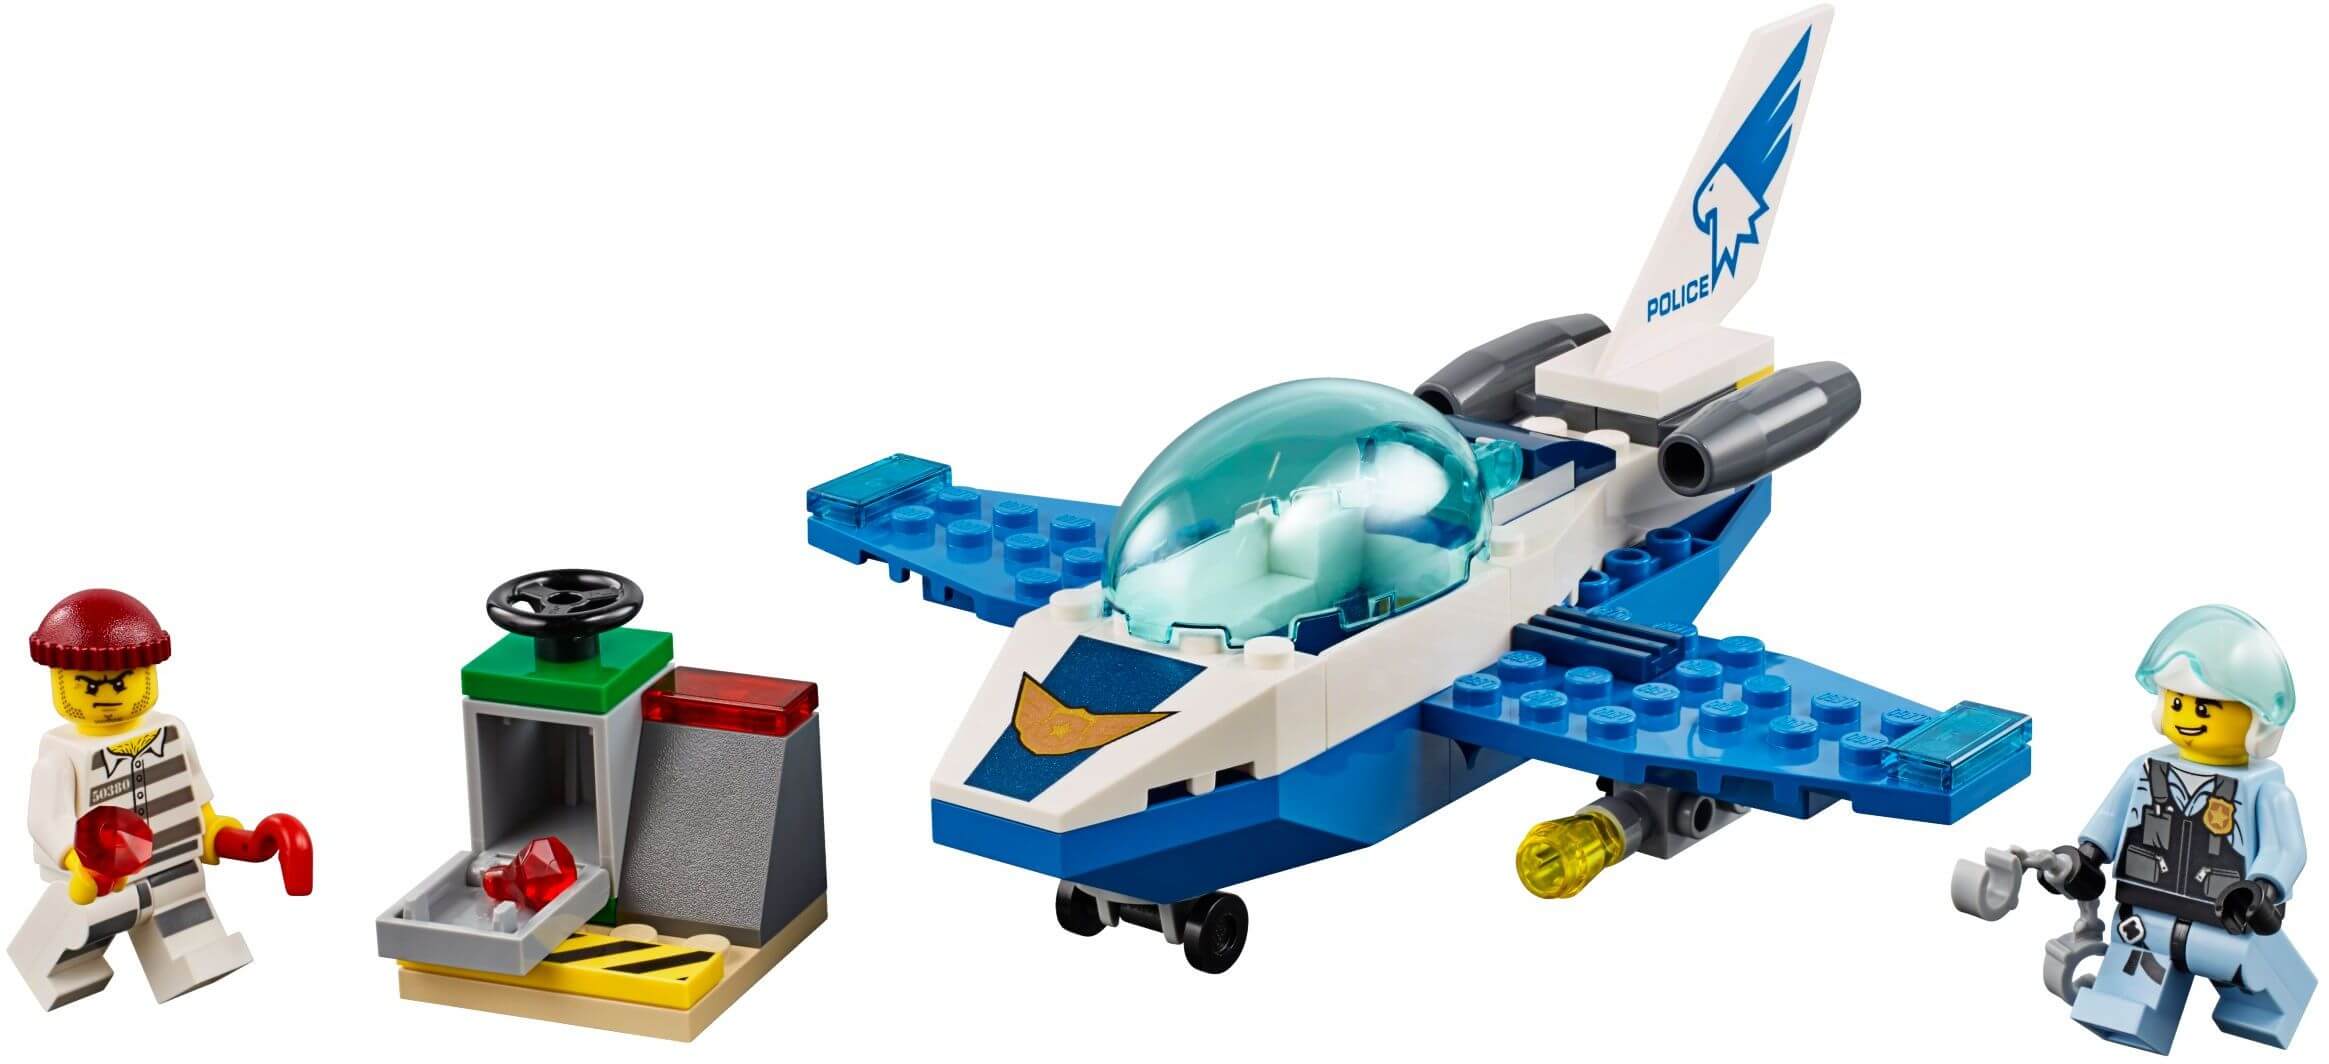 Jet patrulla ( Lego 60206 ) imagen a